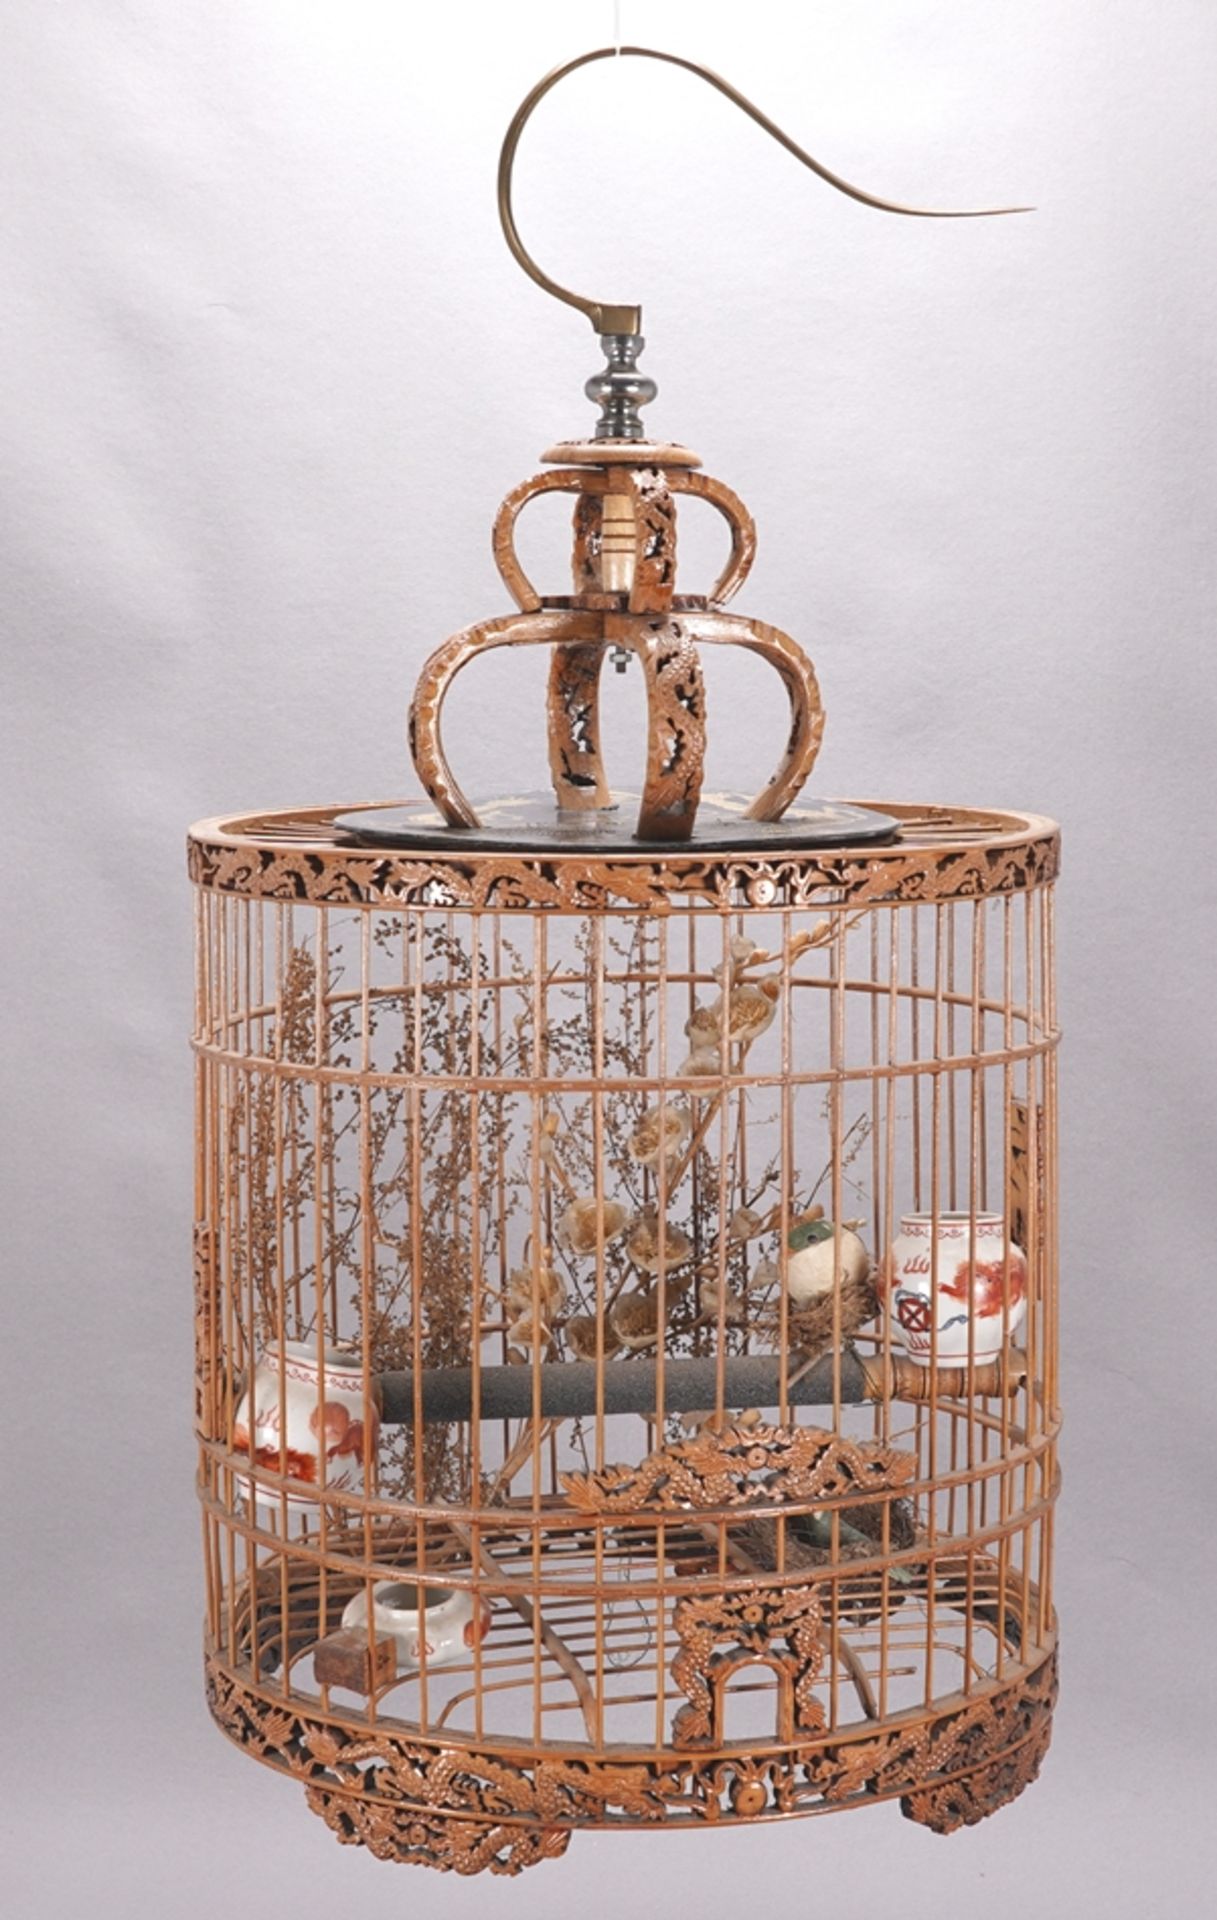 Chinese birdcage